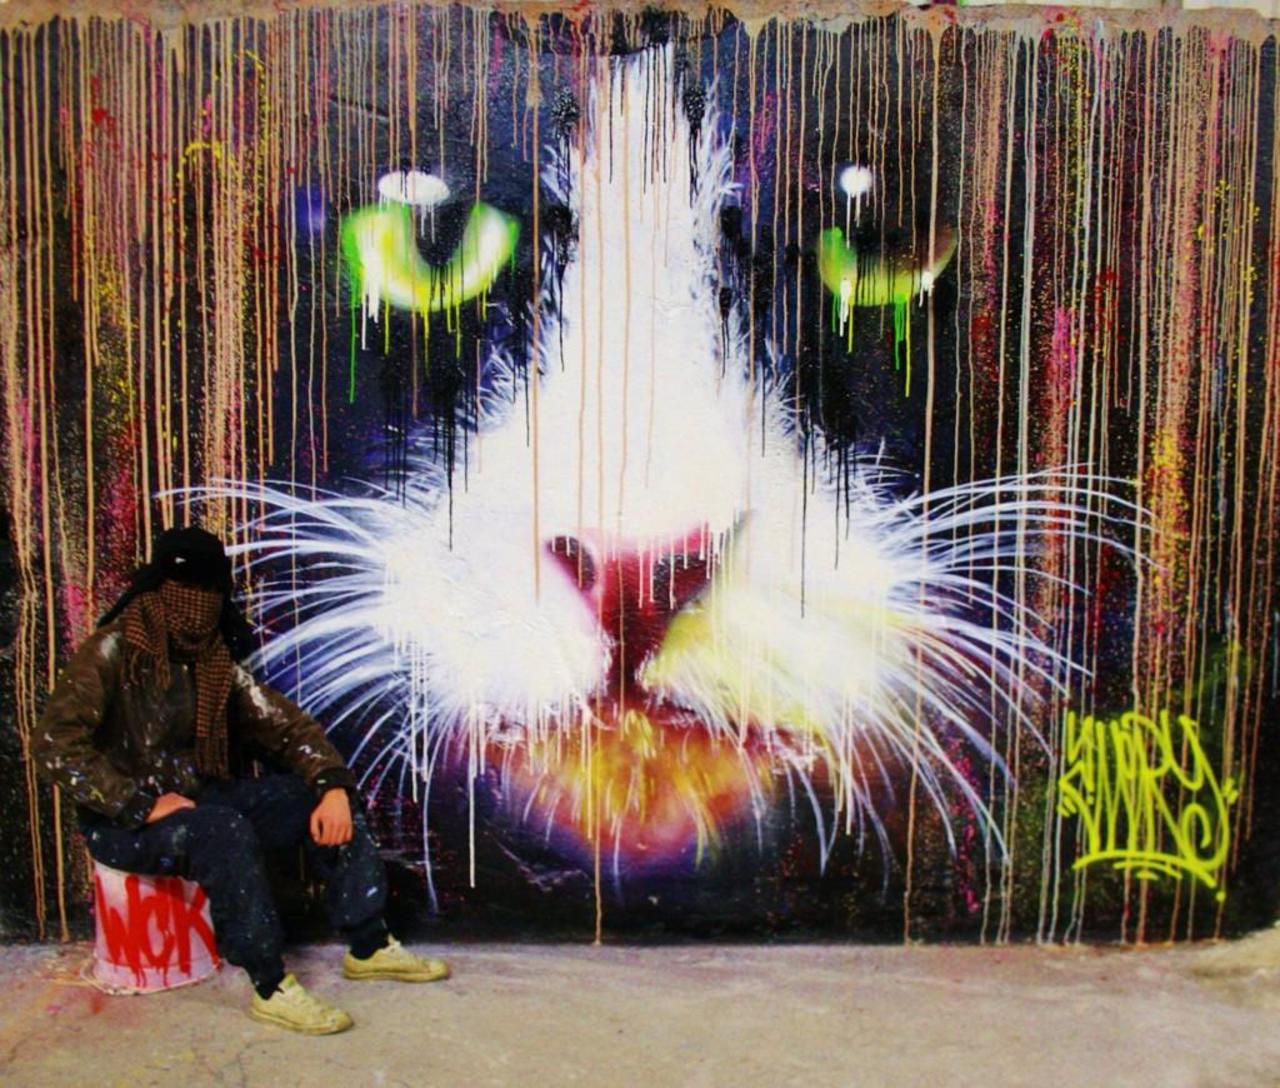 RT @Angelesgmont: Colourful Street Art cat by the artist Averi 

#art #arte #graffiti #streetart http://t.co/qj6J1wIwpT